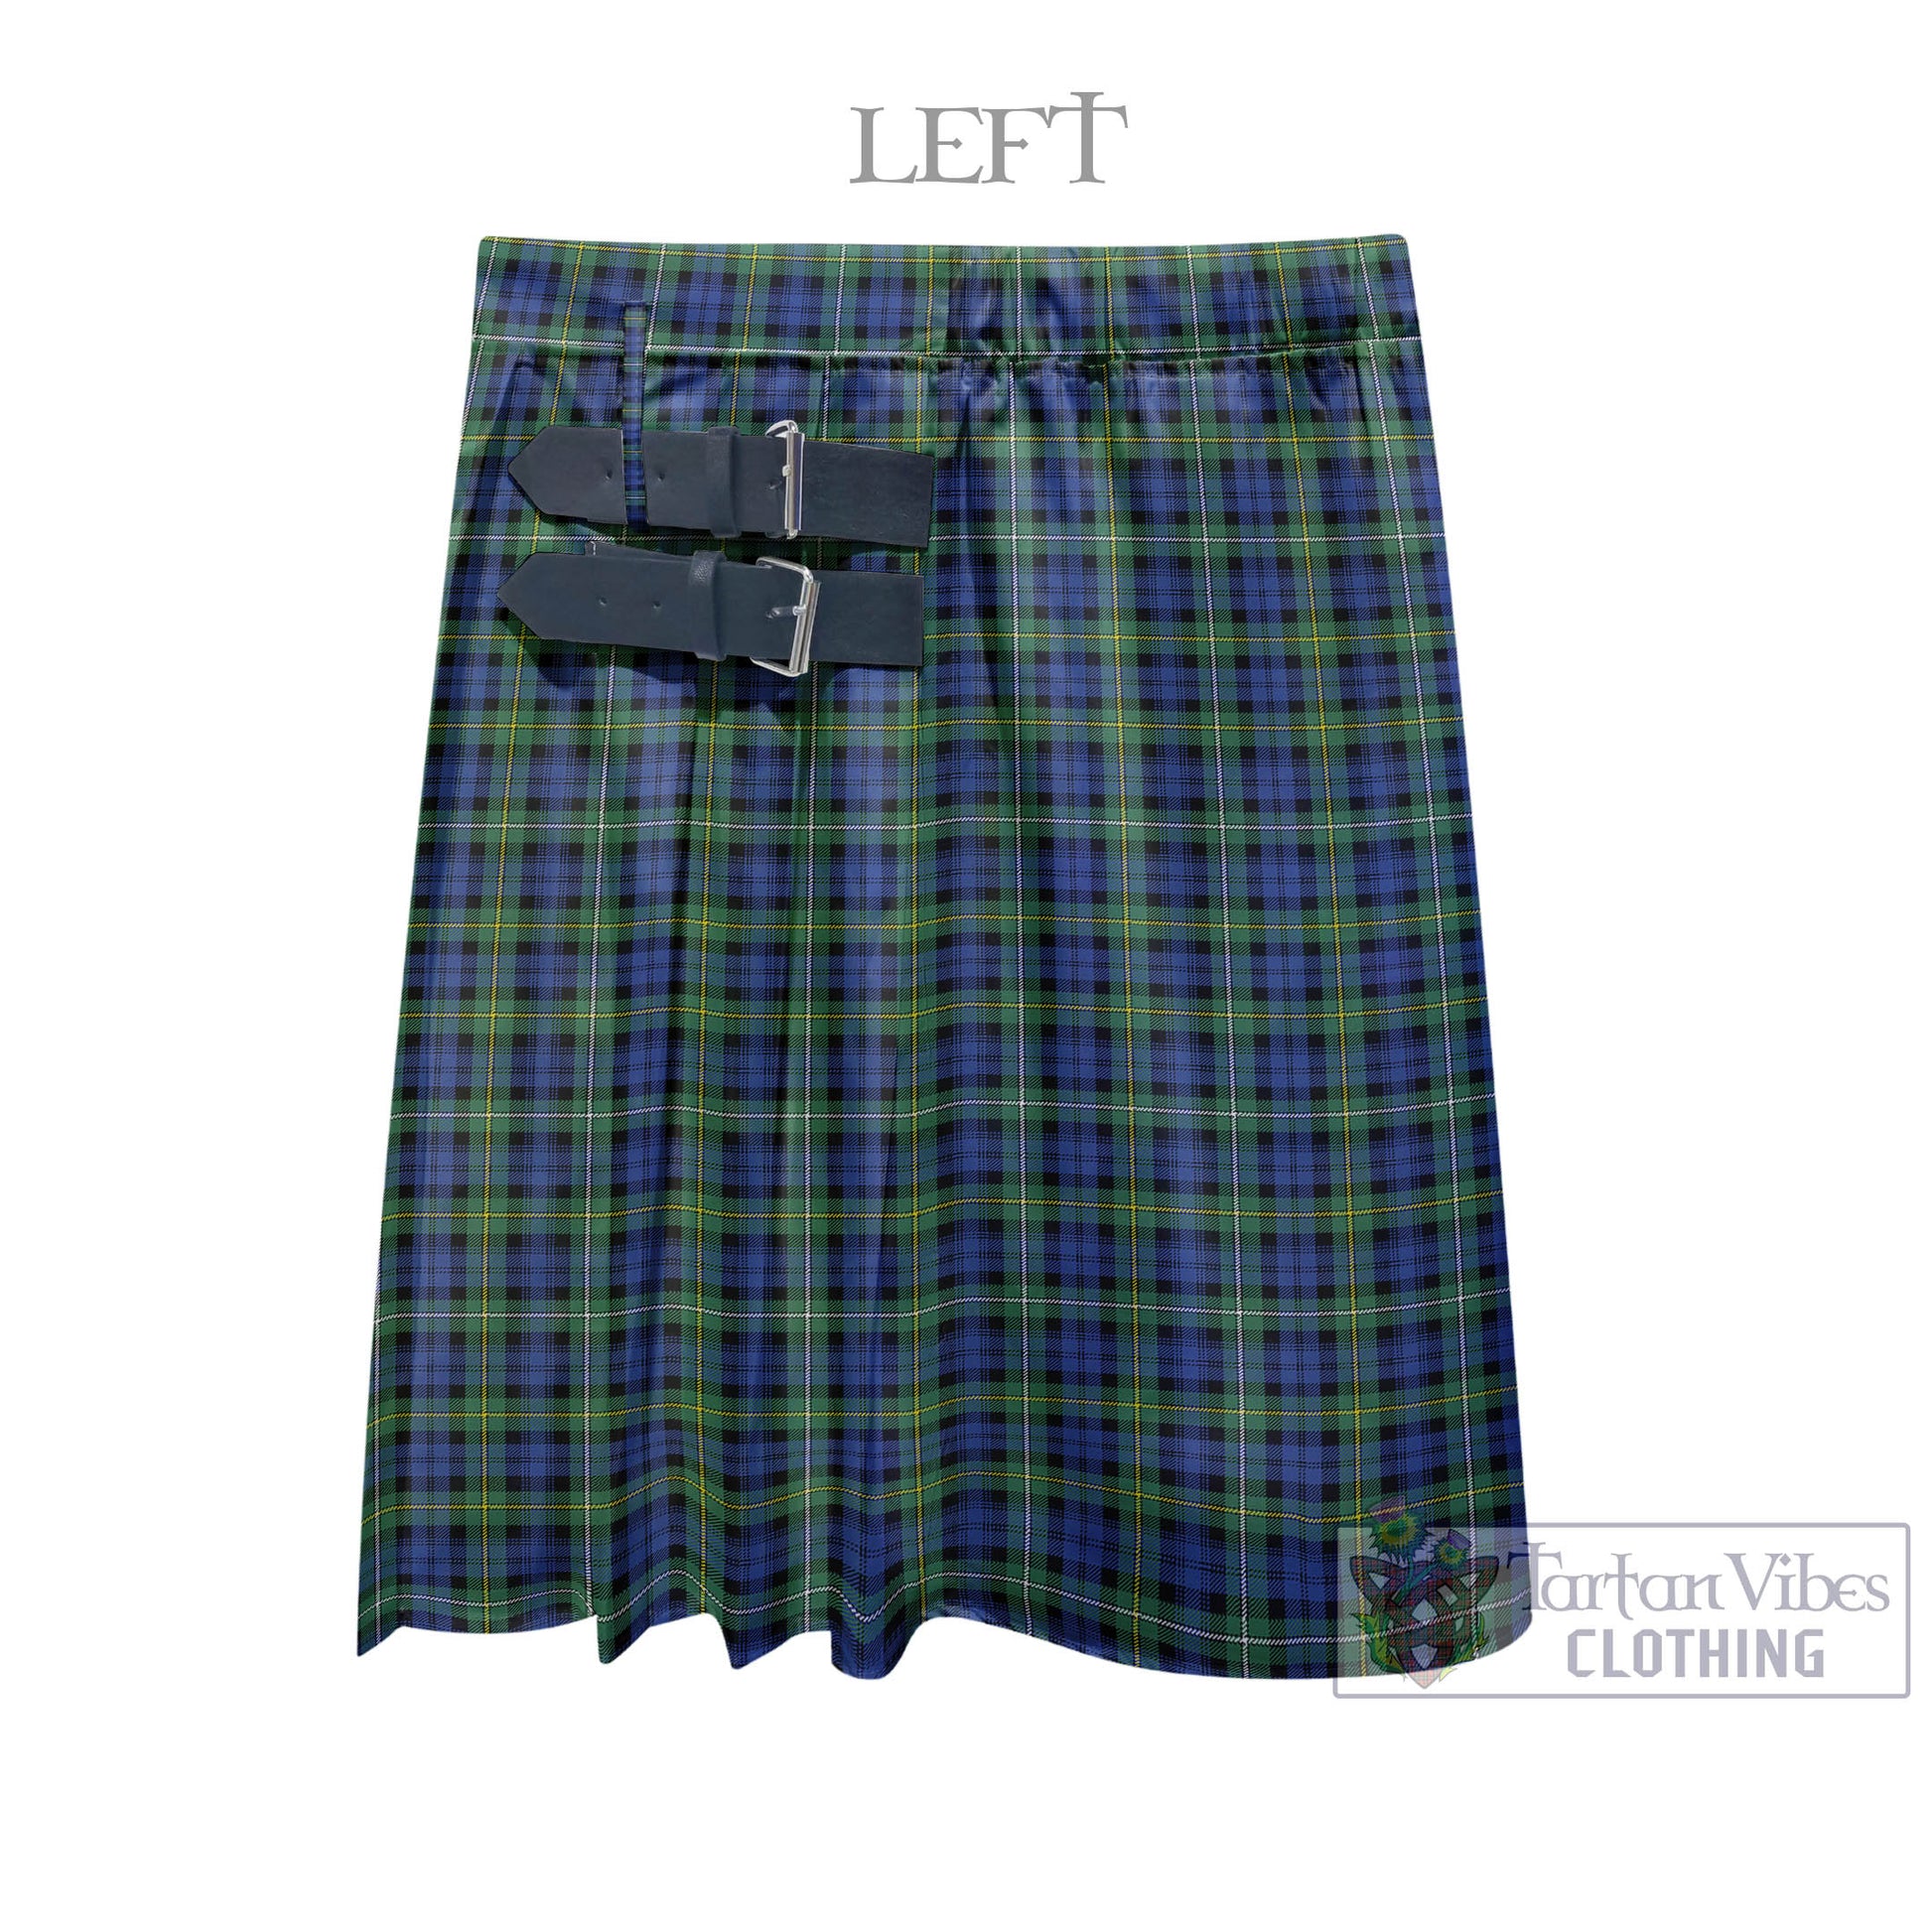 Tartan Vibes Clothing Campbell Argyll Ancient Tartan Men's Pleated Skirt - Fashion Casual Retro Scottish Style